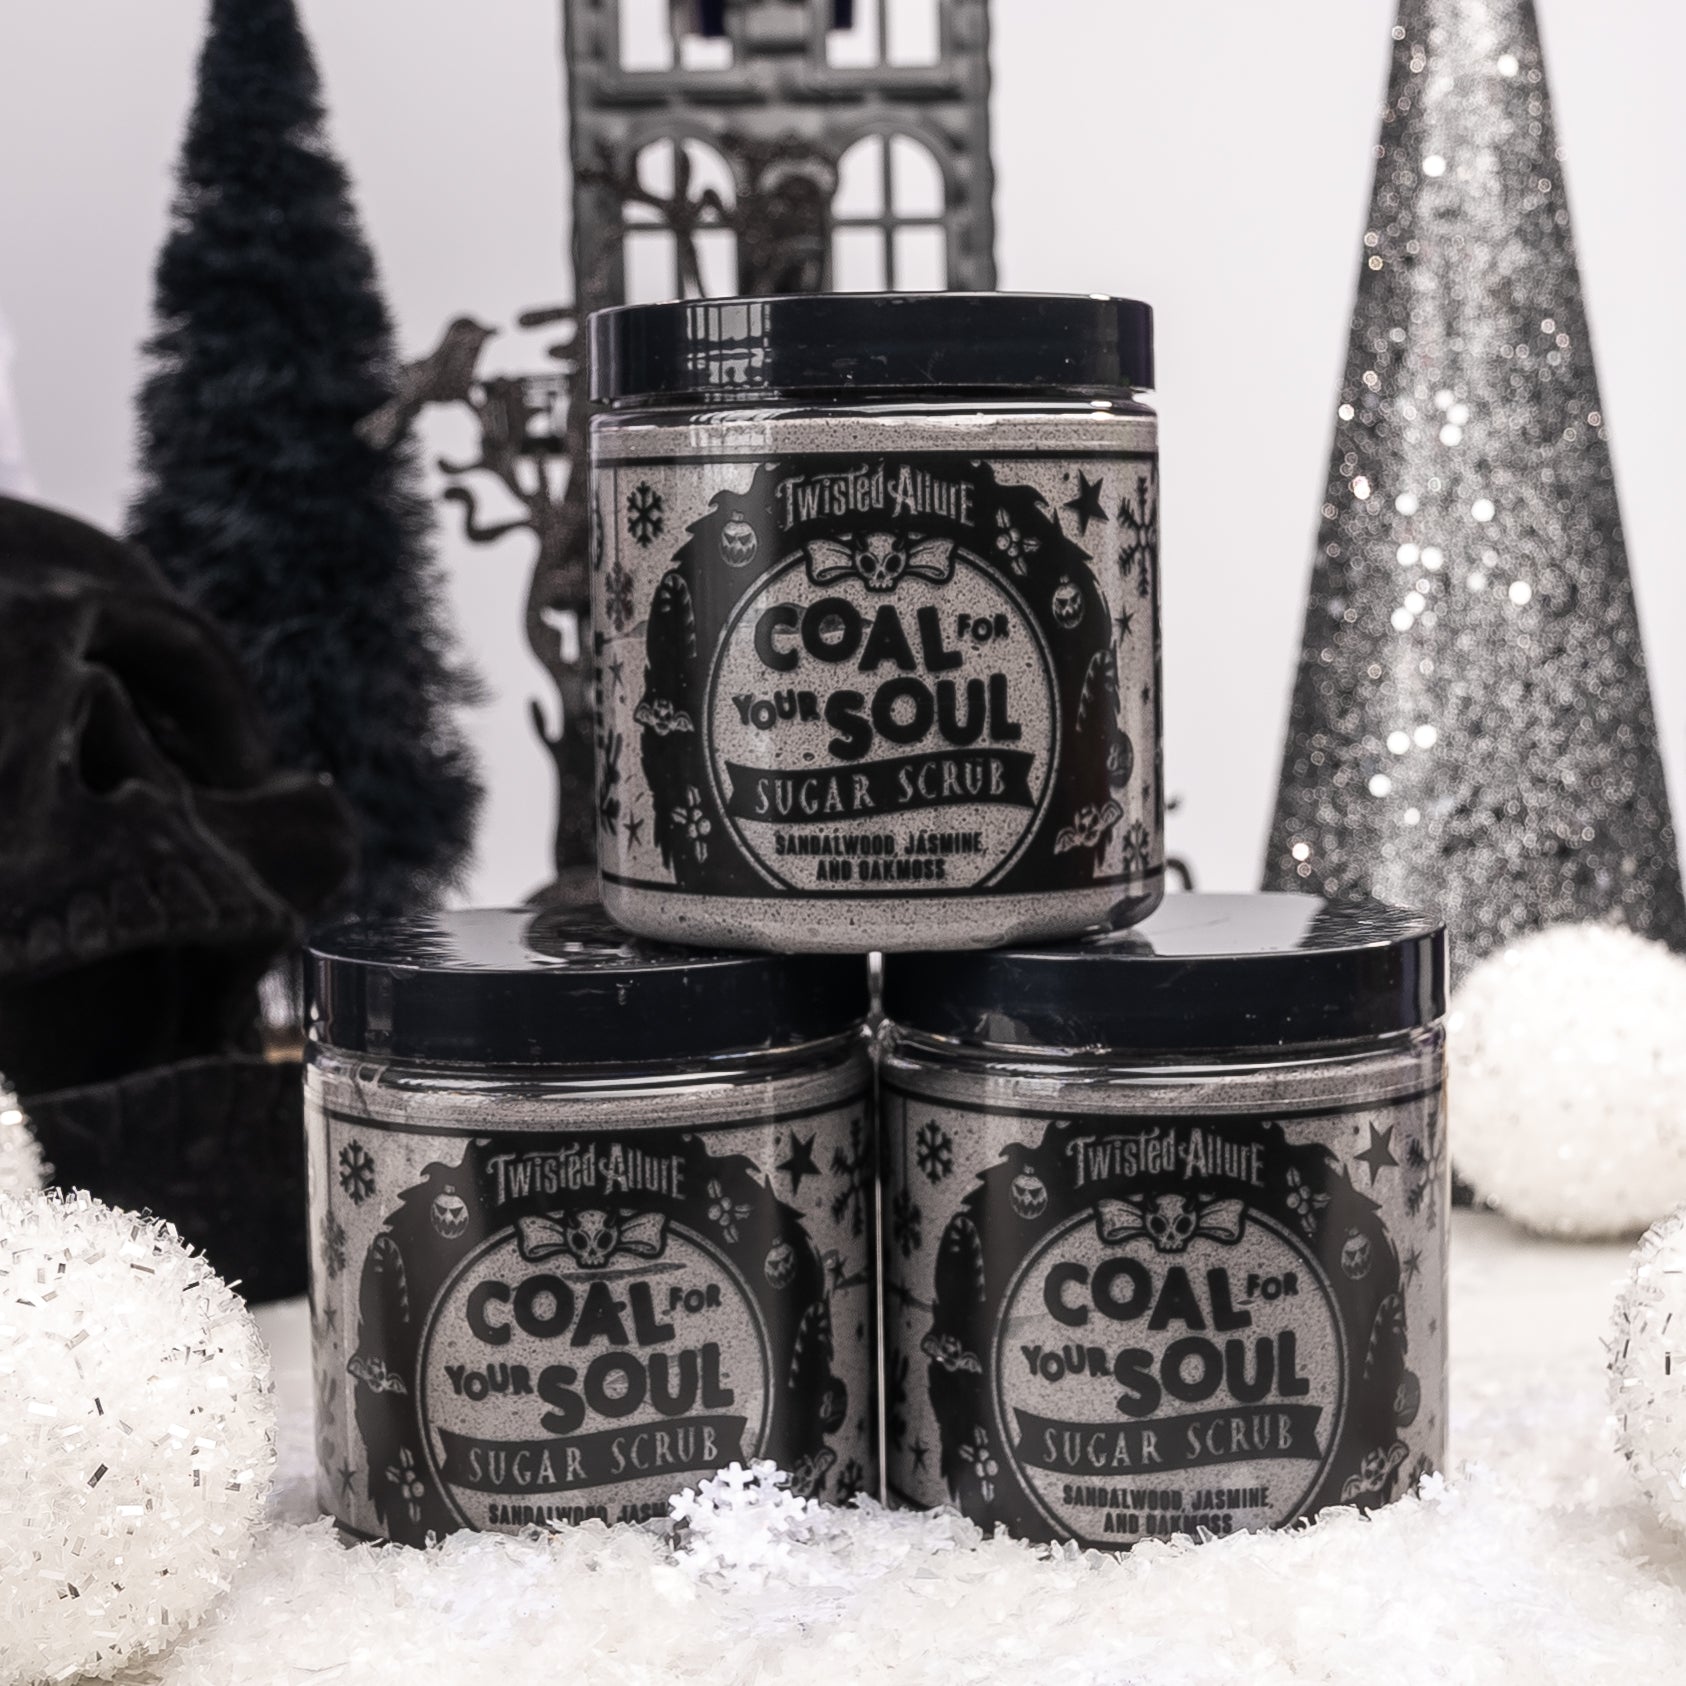 Coal for your soul Sugar Scrub